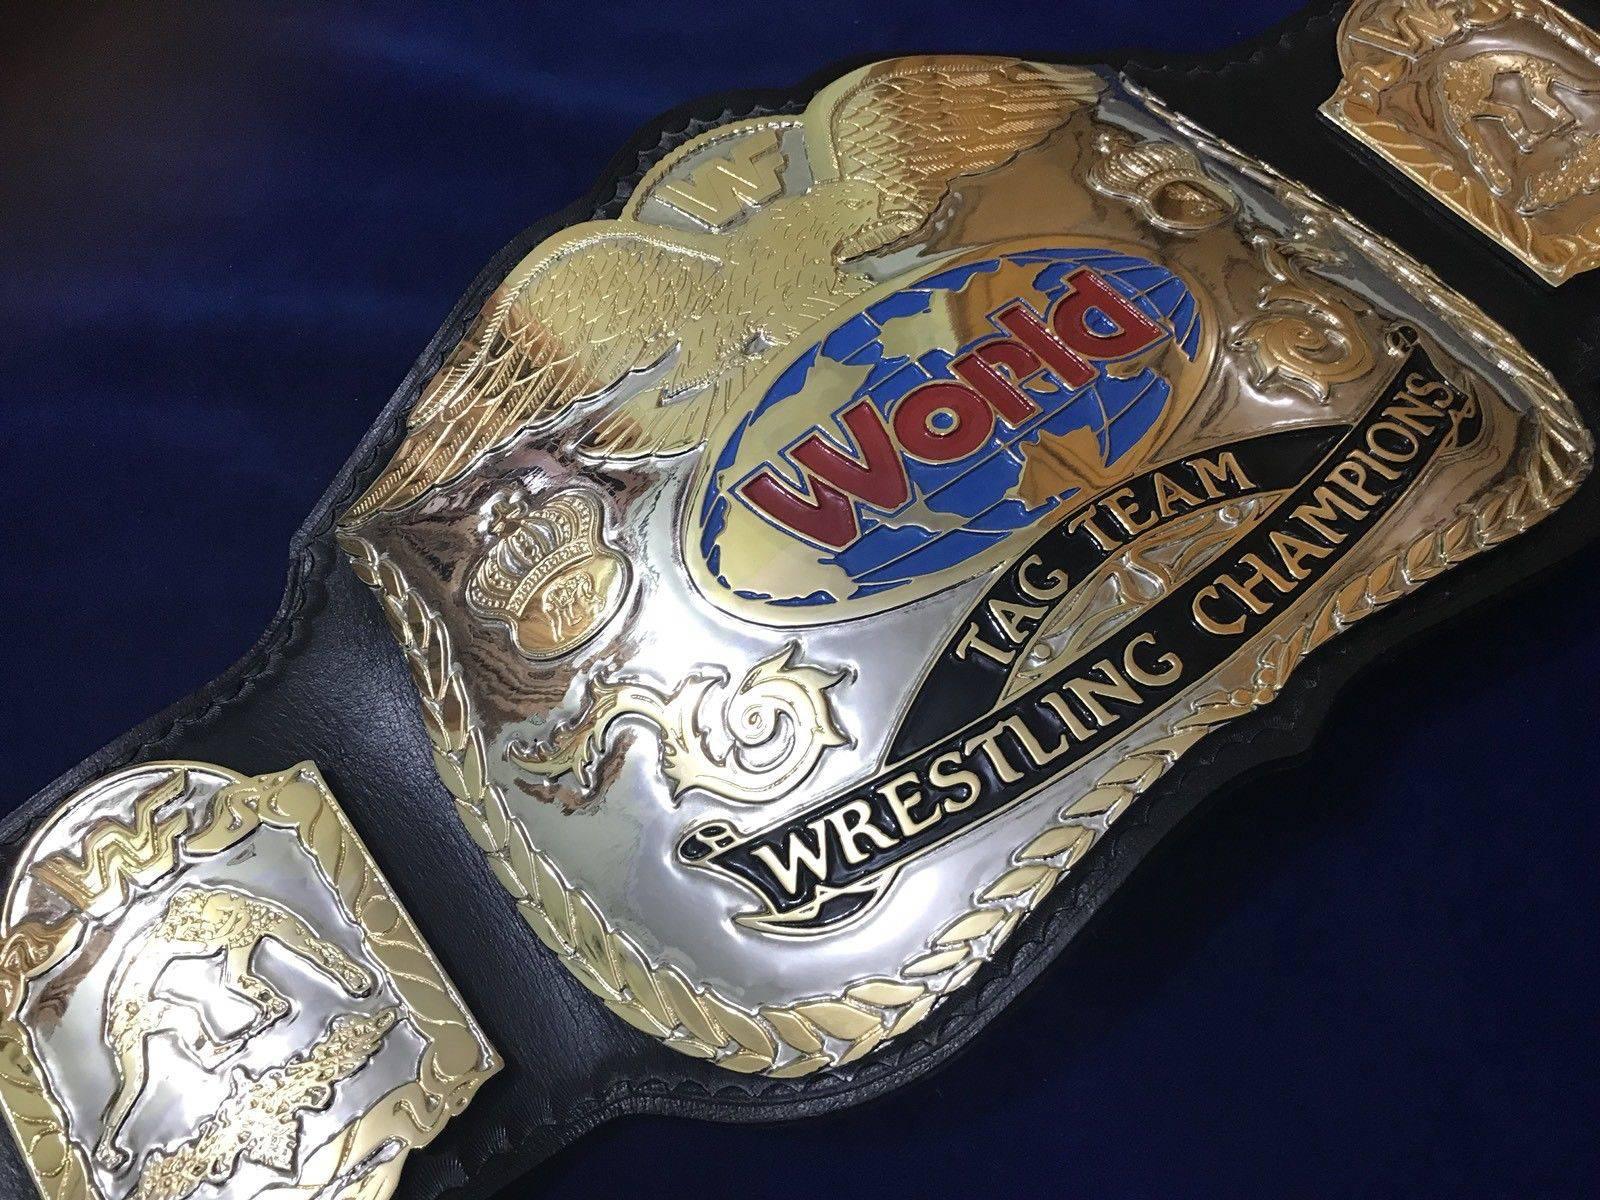 WWF WORLD TAG TEAM DUAL PLATED 24K GOLD Zinc Championship Belt